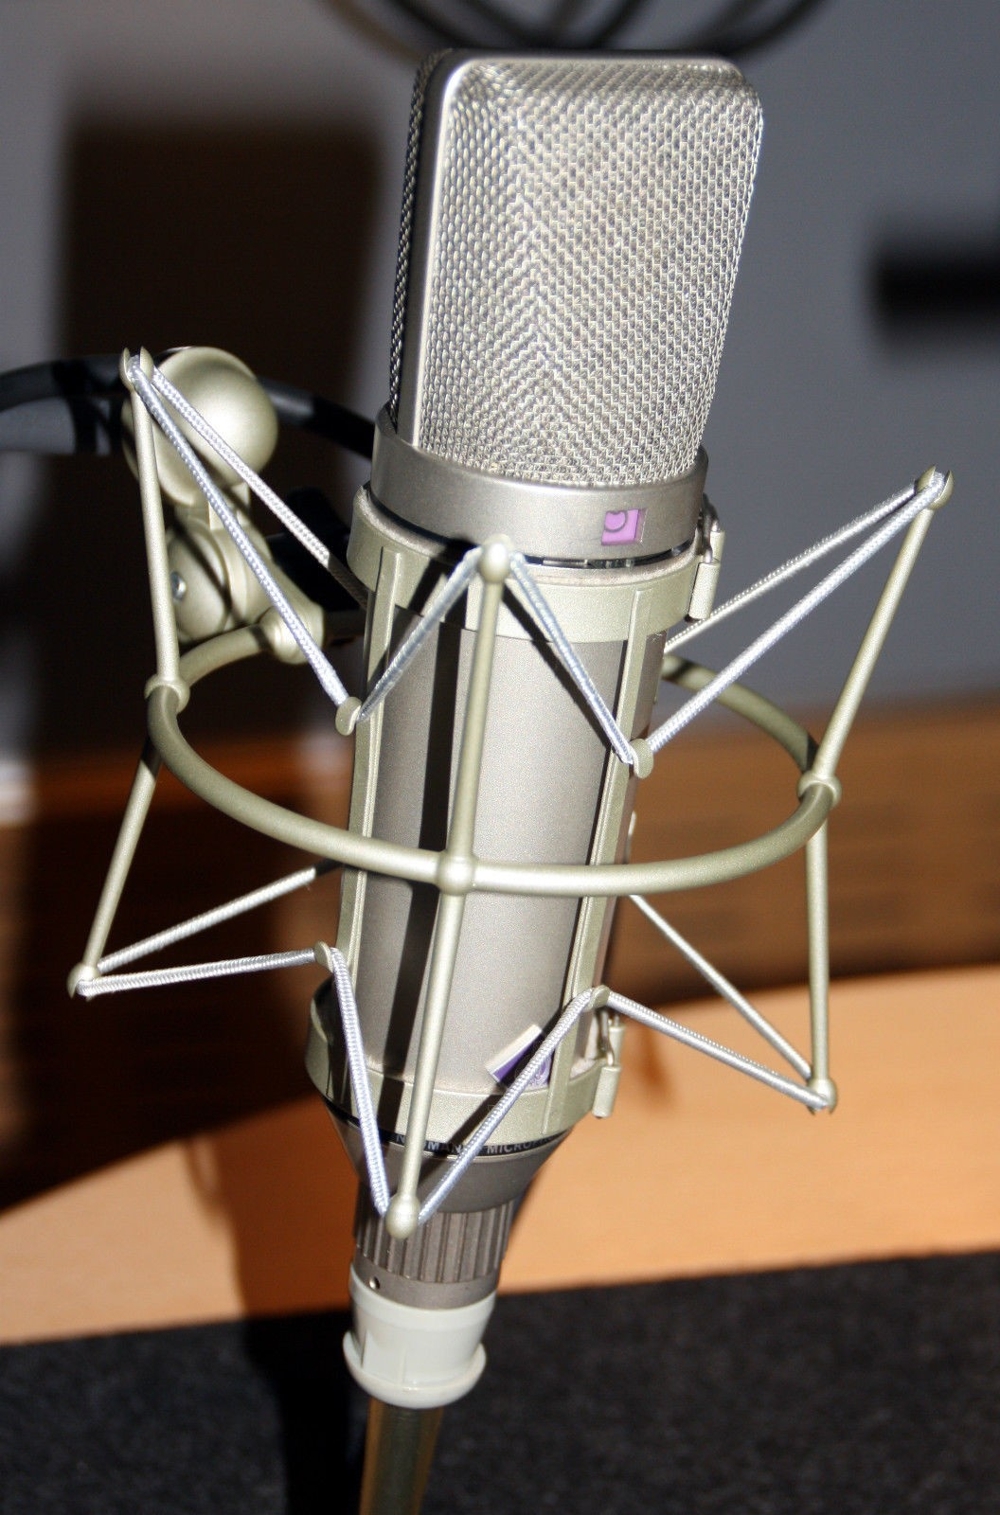 Neumann U87 Condenser Studio Mikrofon Microphone in dream condition Serial 9697